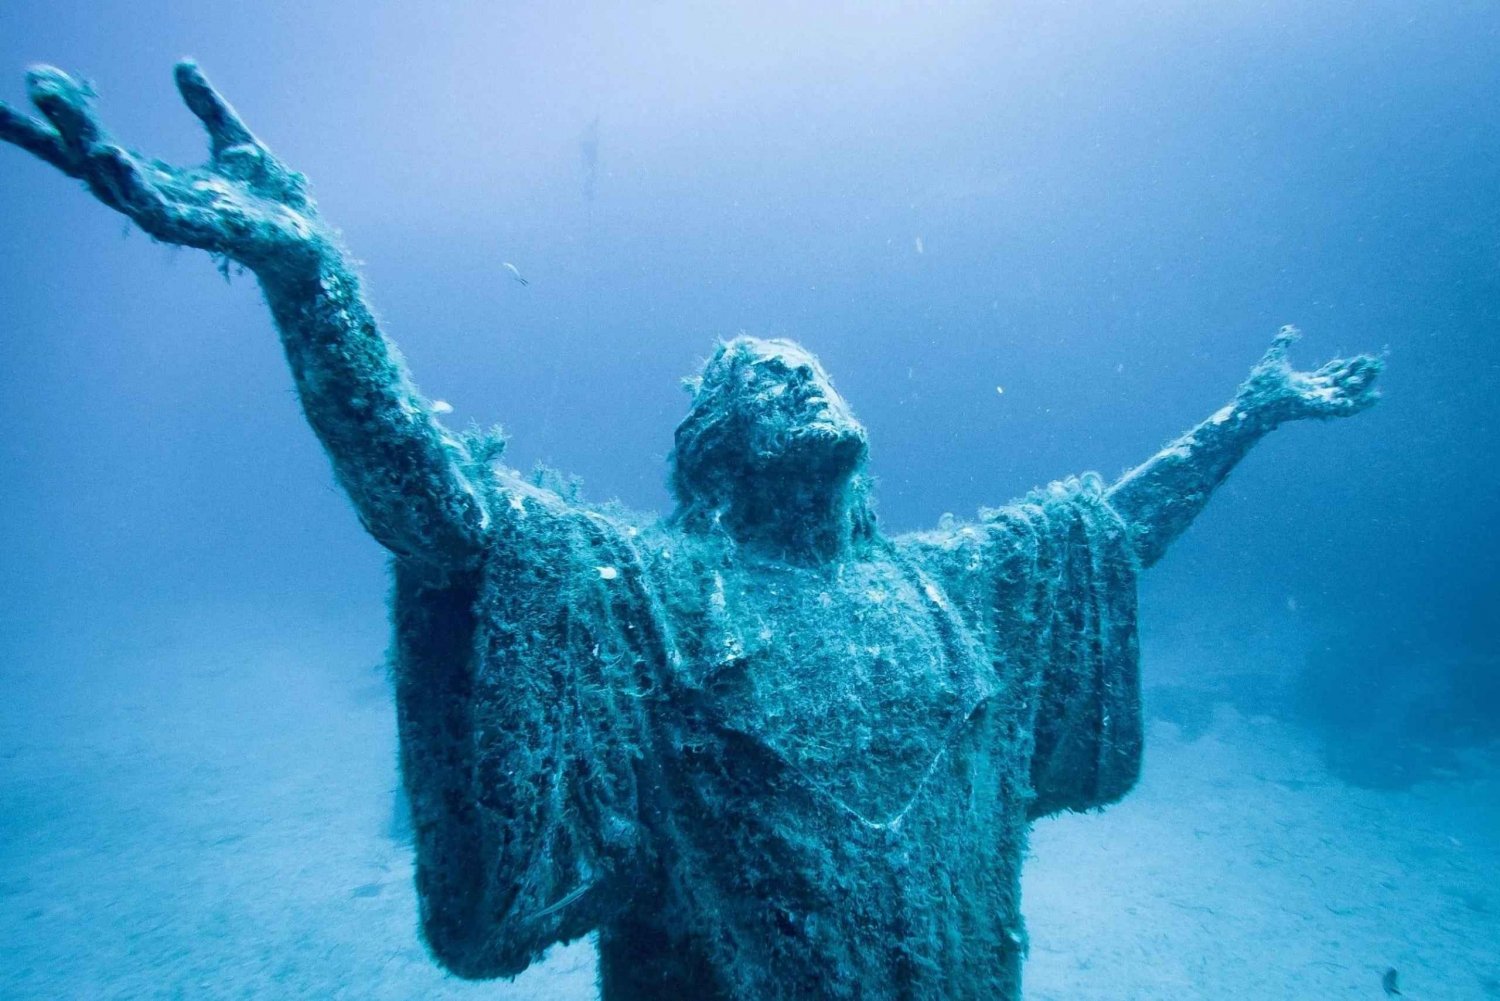 Thrilling dive Tour Malta. Statue of Christ, shipwrecks